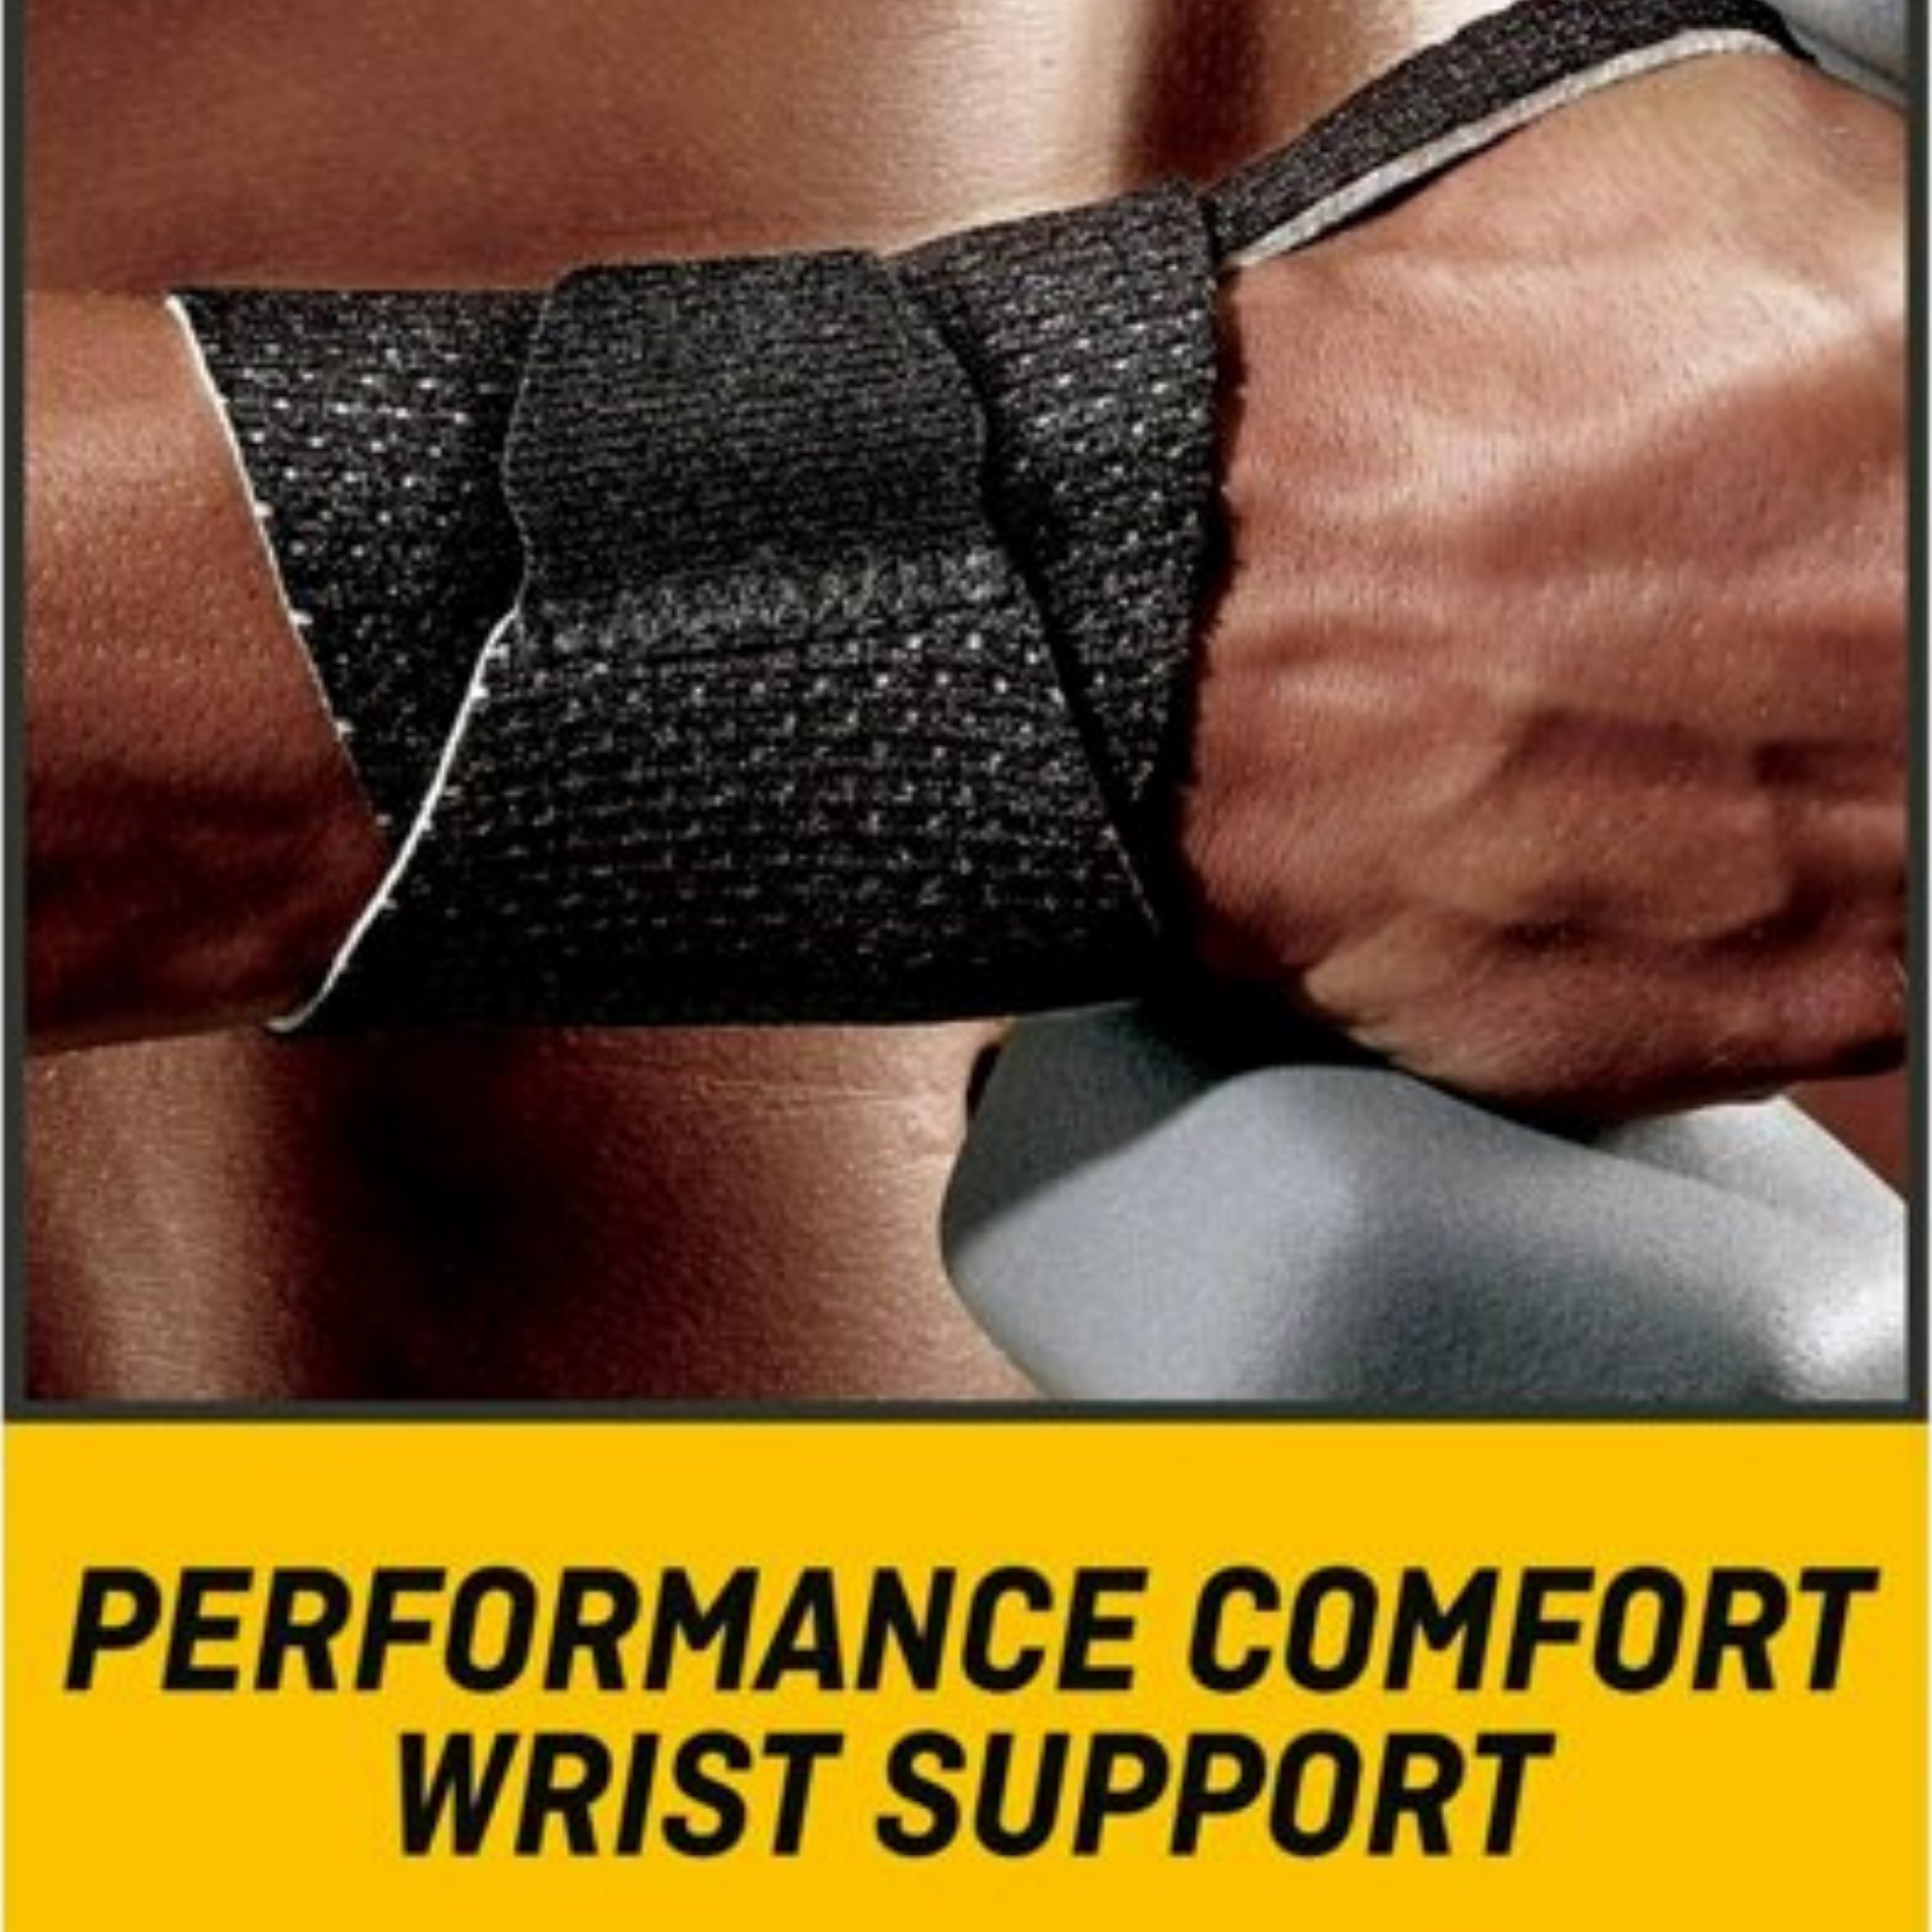 Futuro Sport Adjustable Wrist Support : : Health